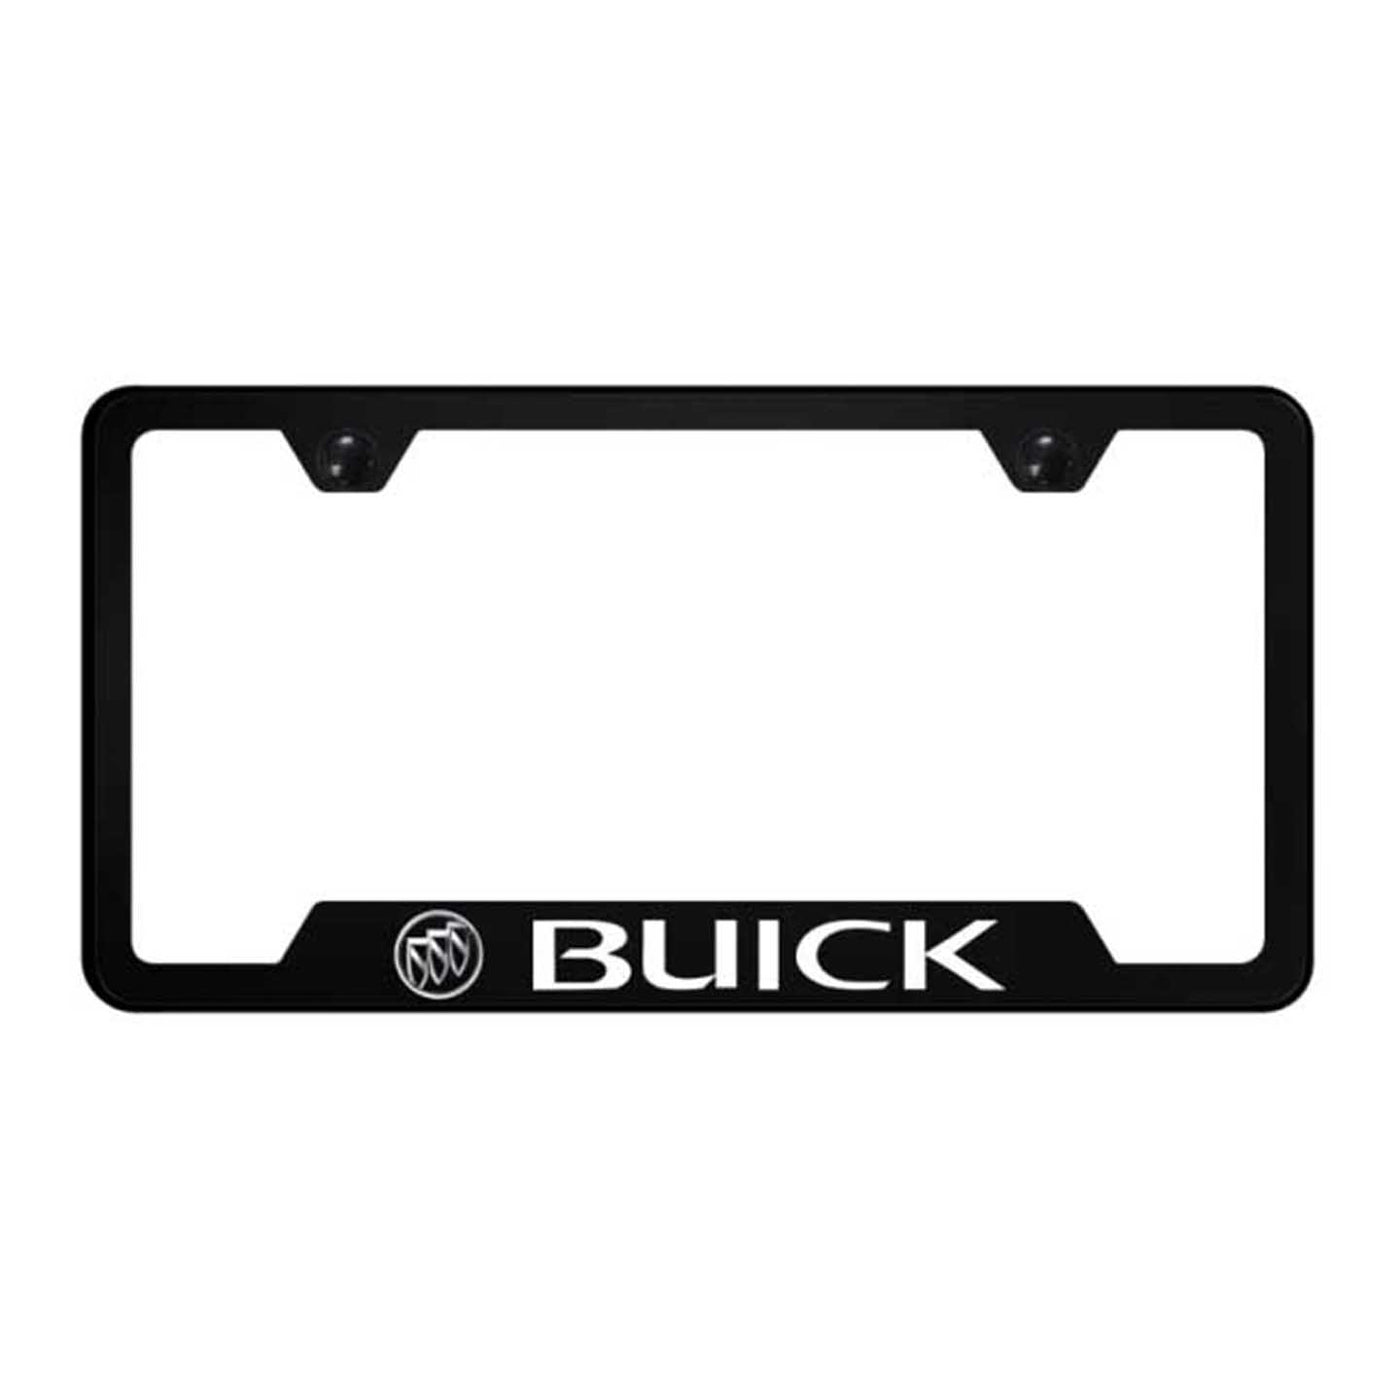 Buick PC Notched Frame - UV Print on Black